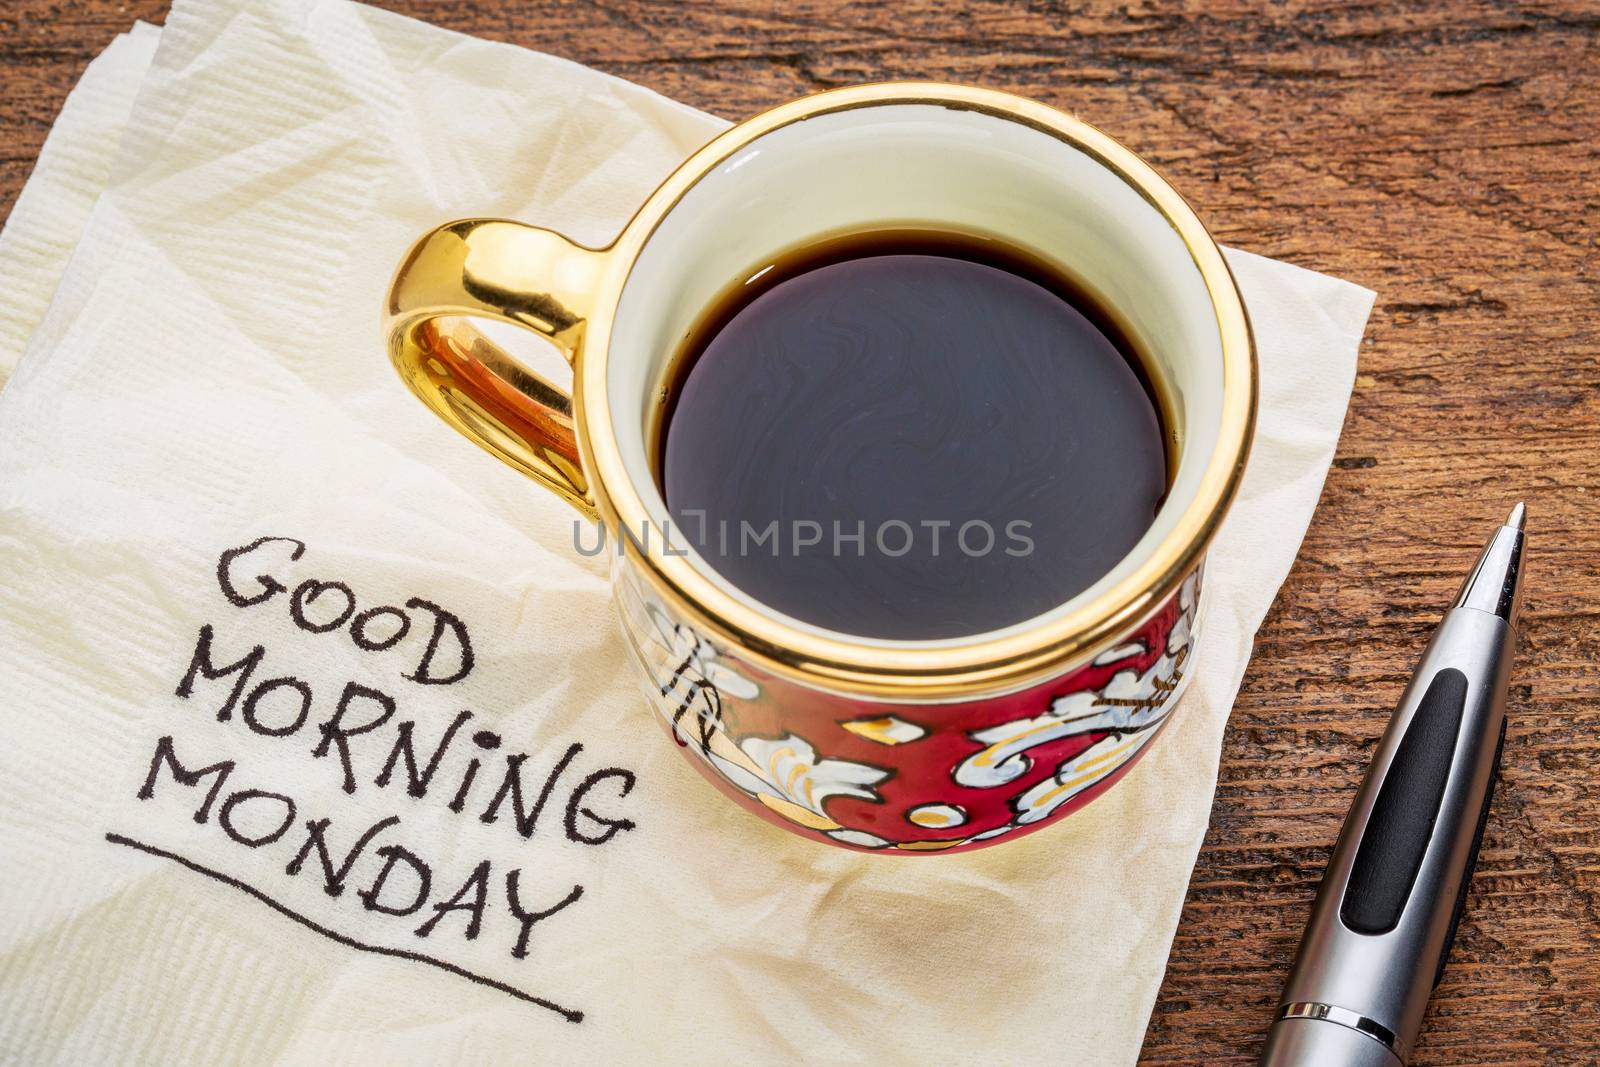 Good morning, Monday on napkin by PixelsAway